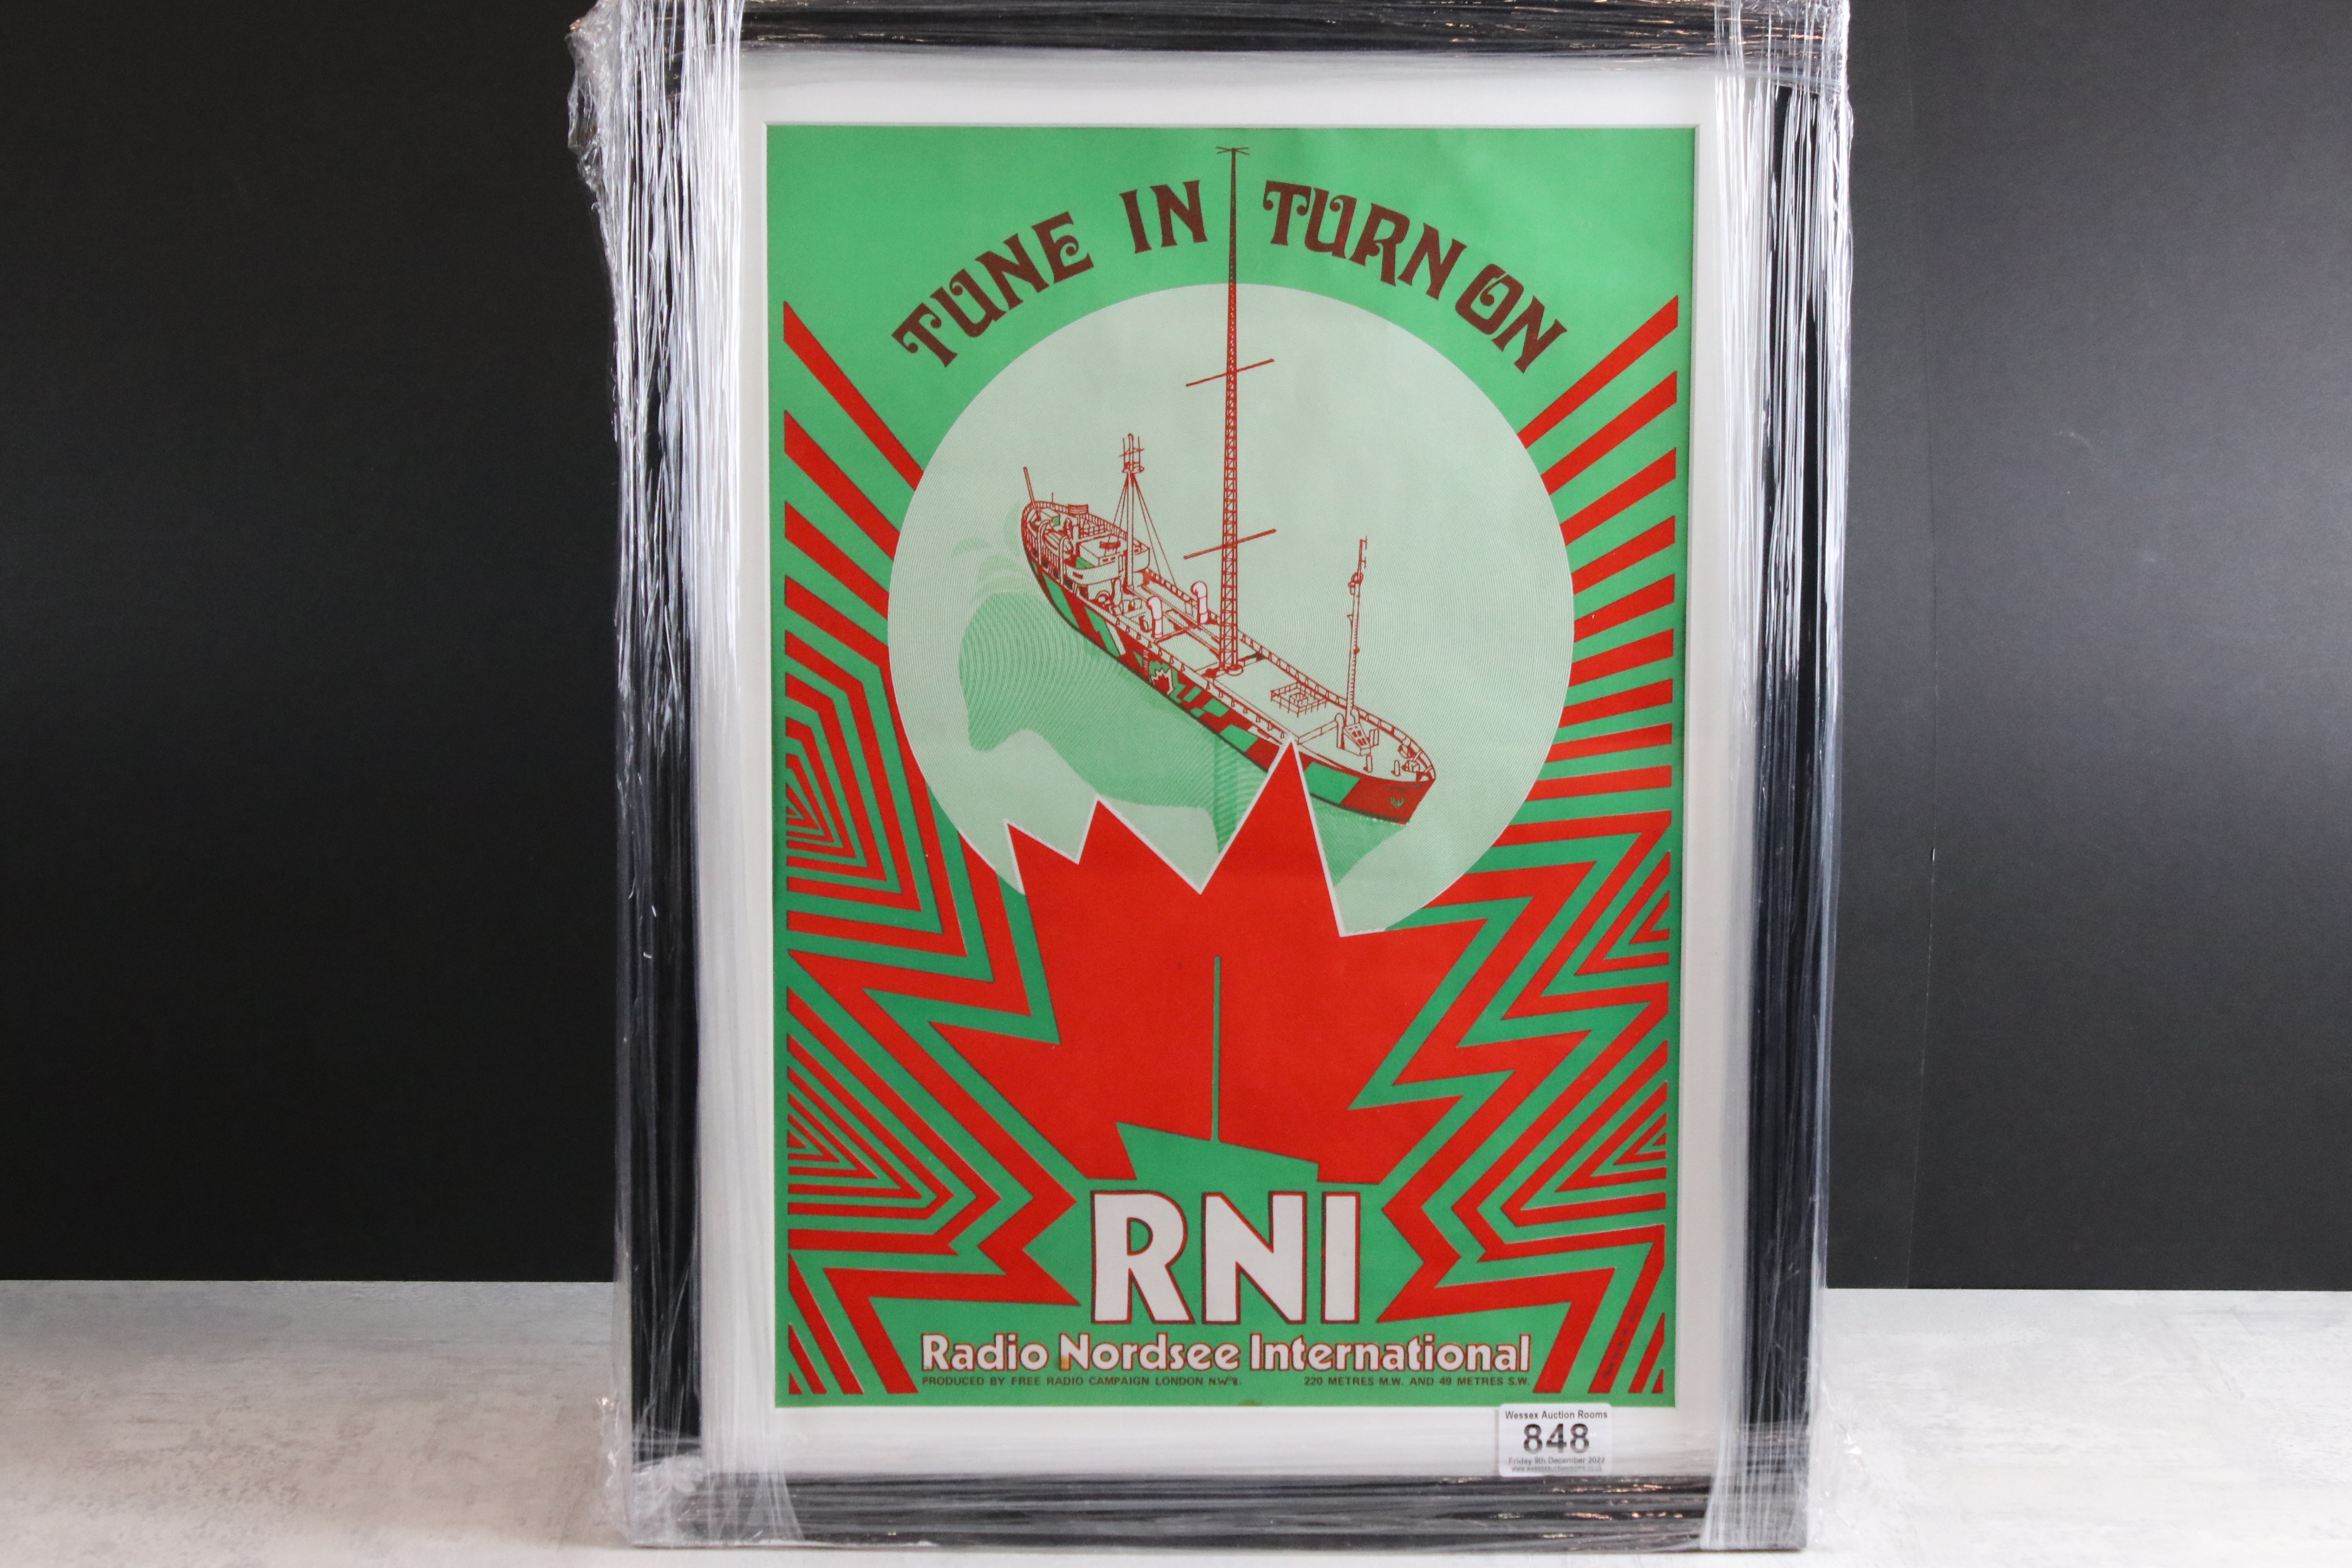 Music Memorabilia - Tune In Turn On promotional poster for Radio Nordsee International (RNI /